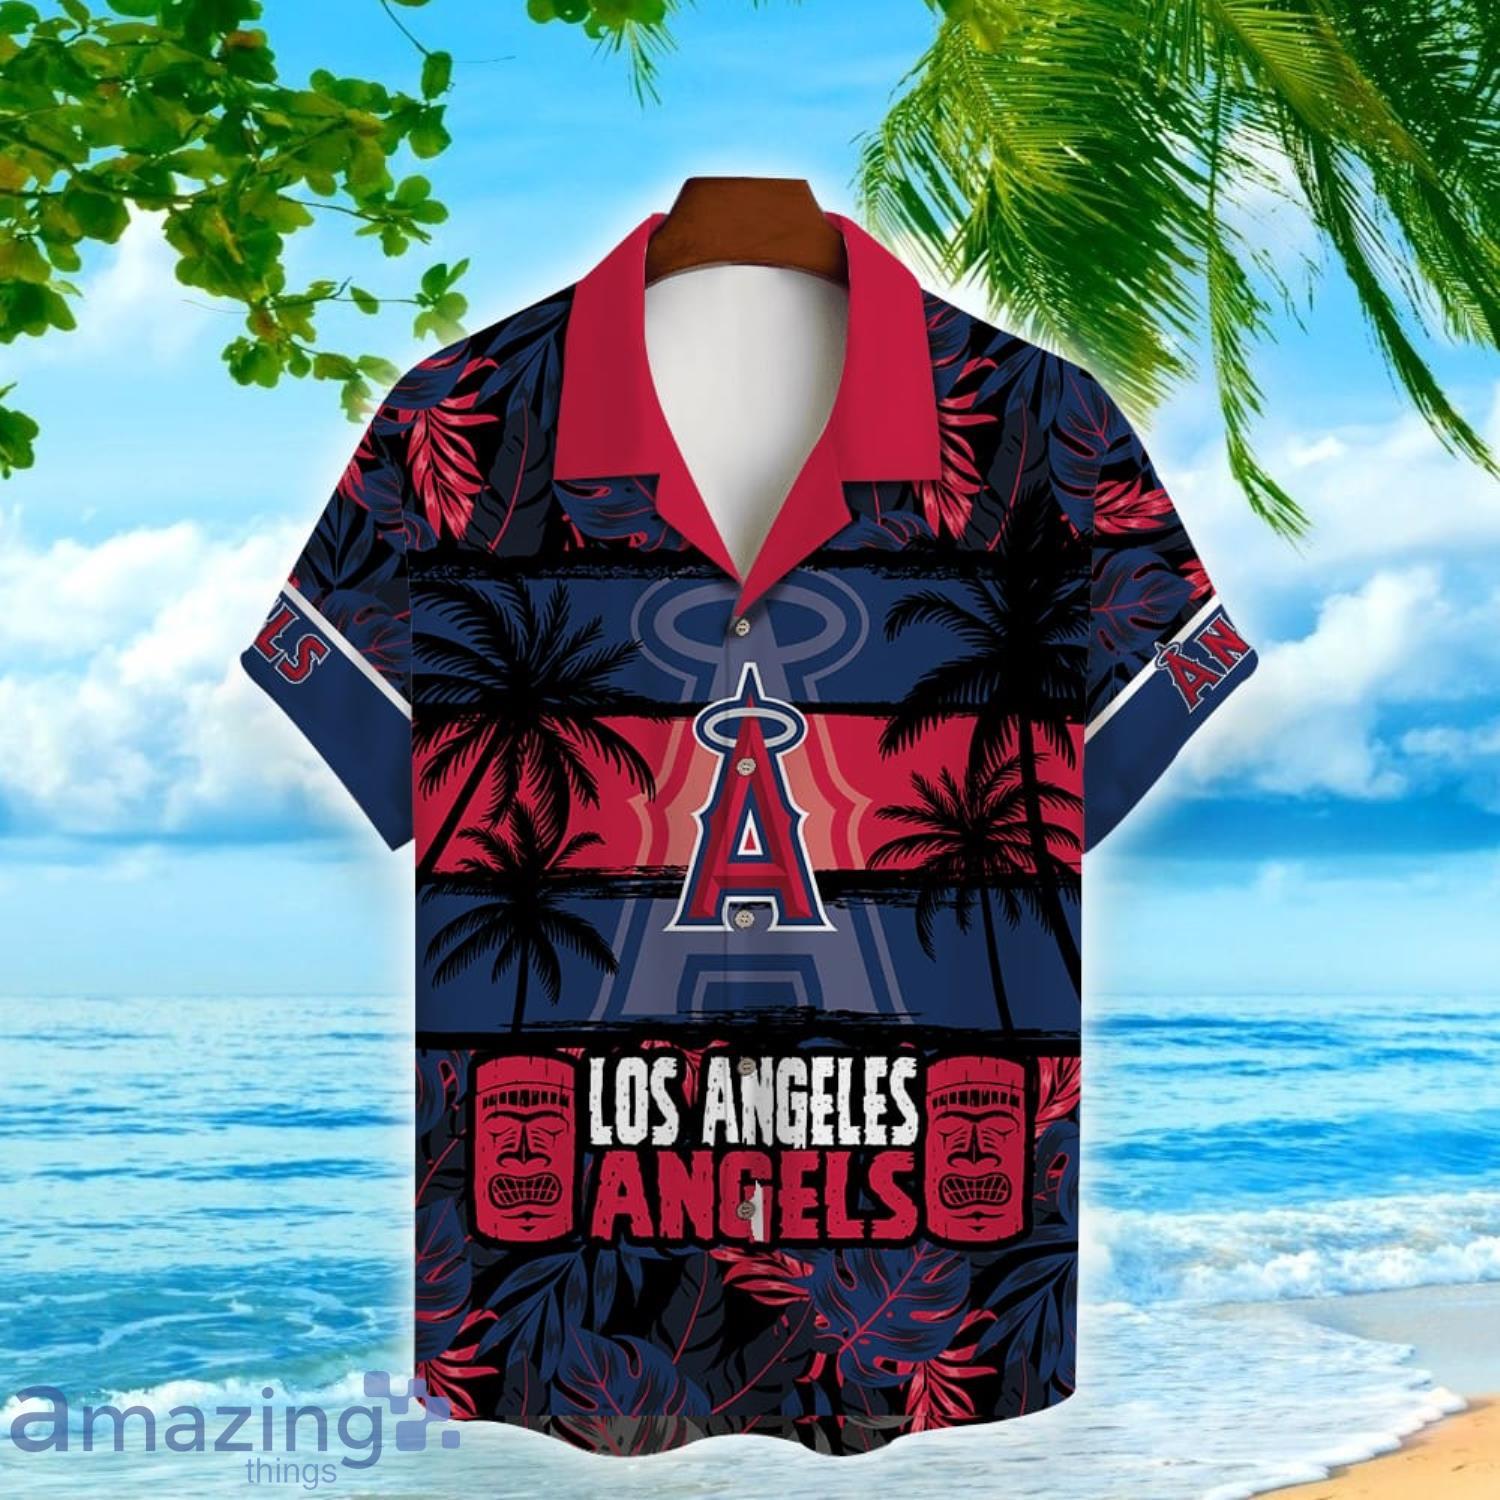 Los Angeles Angels Apparel, Angels Gear, Merchandise